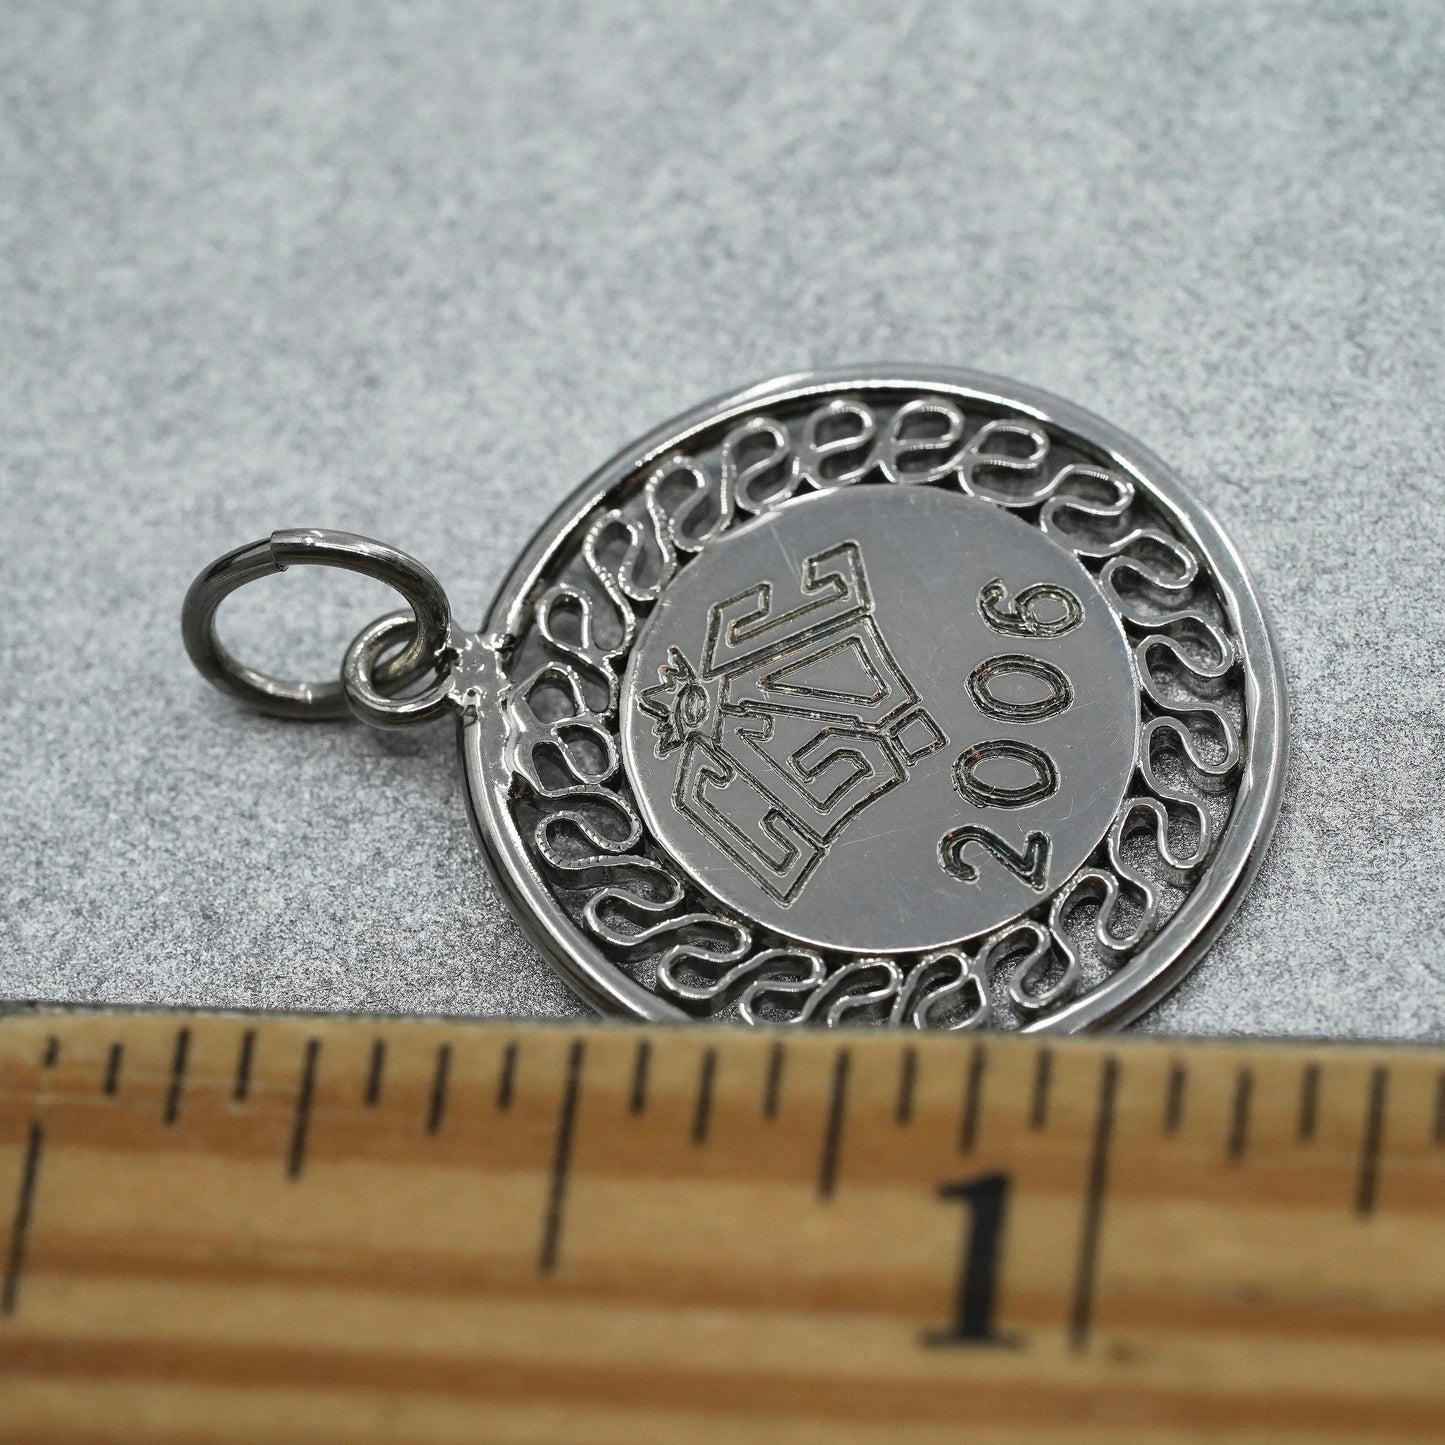 Vintage sterling 925 silver pendant charm engraved “CGDC 2006”